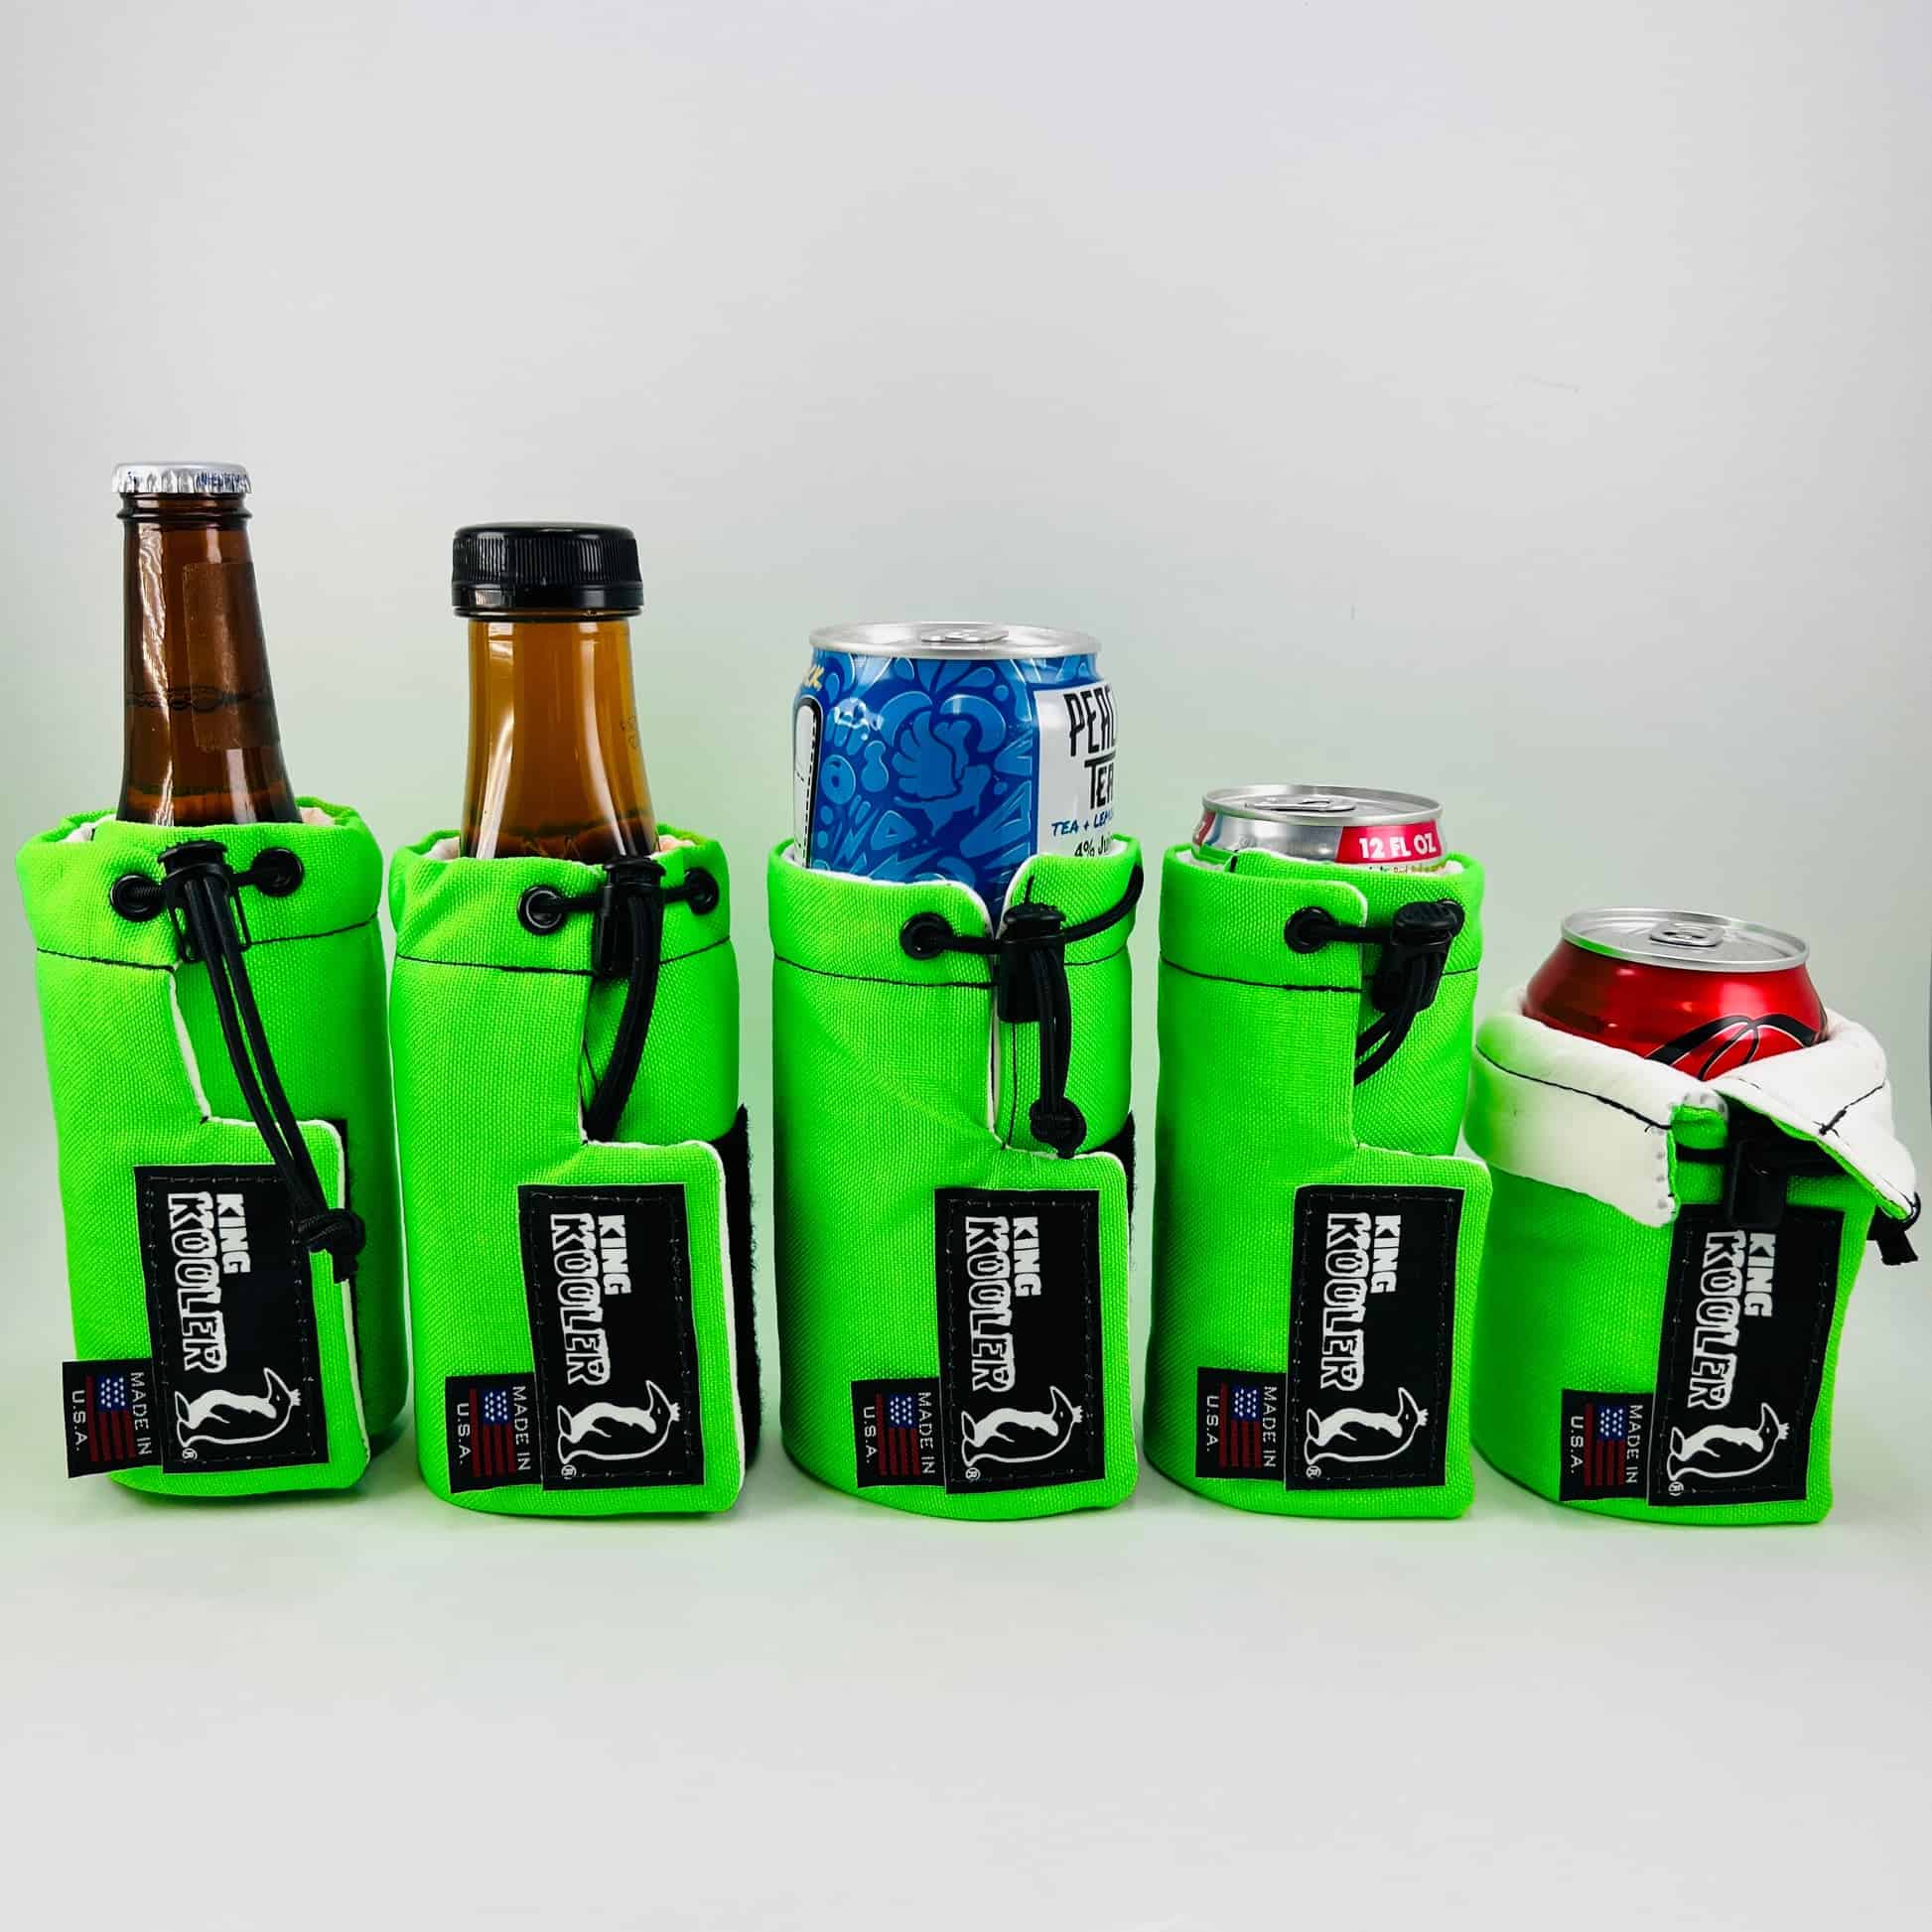 KingKooler's Premium Quality American Beverage Insulators For Your Drinks